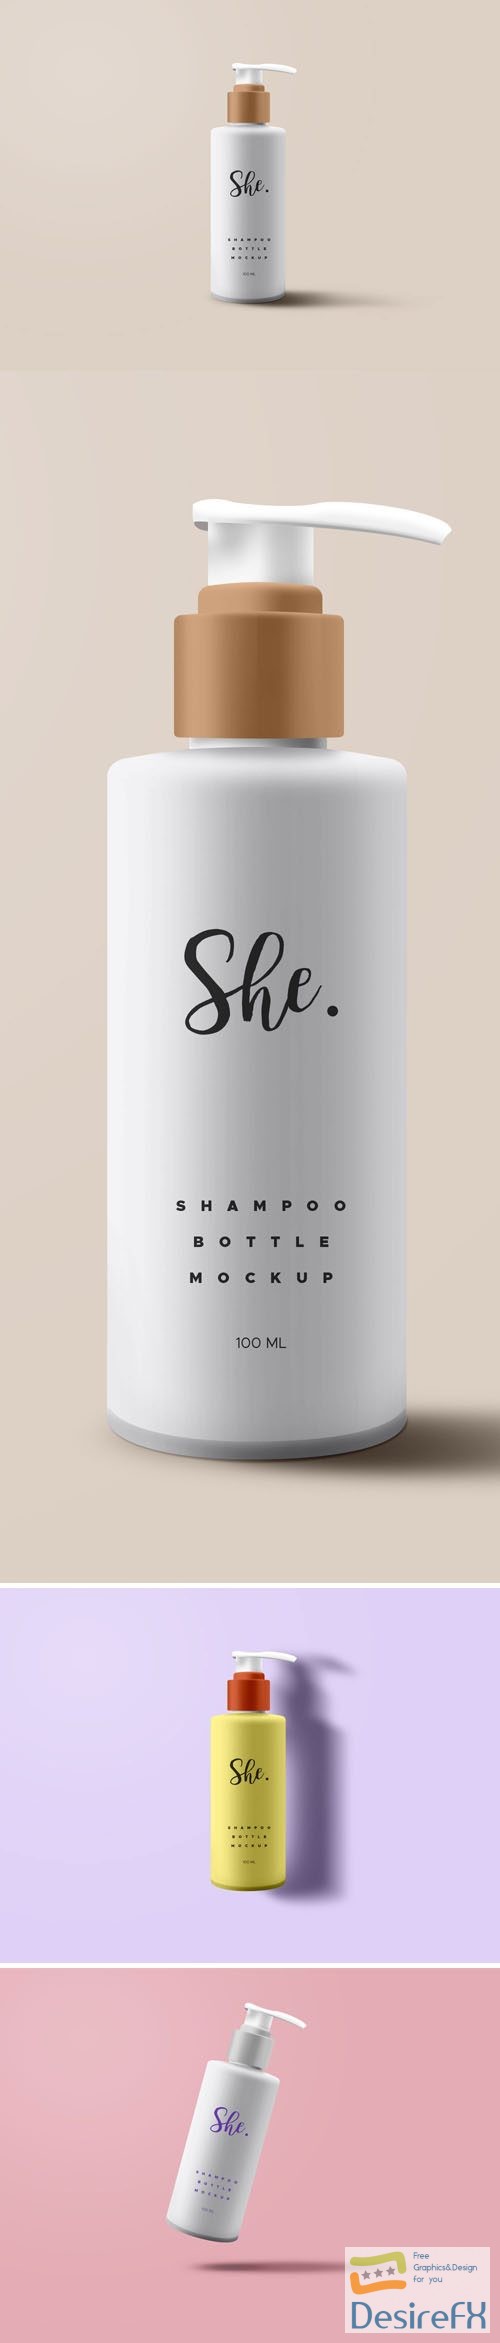 Shampoo Bottle Packaging PSD Mockup Templates